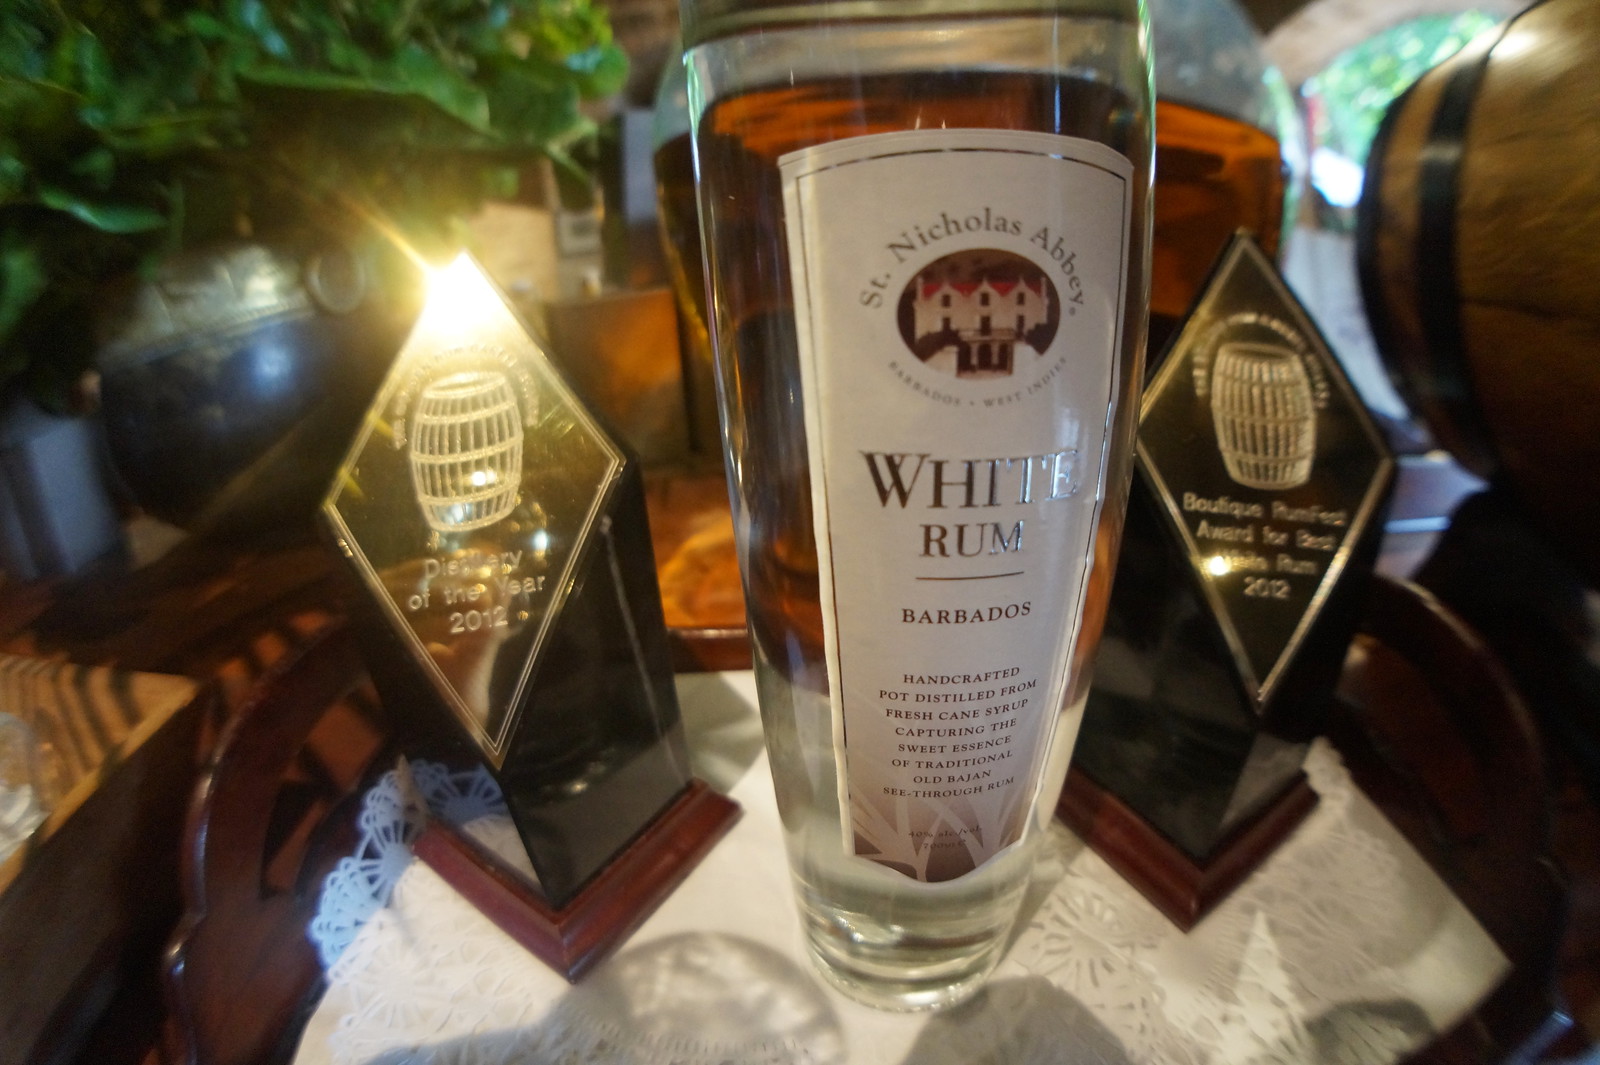 Saint Nicholas Abbey Premium White Rum